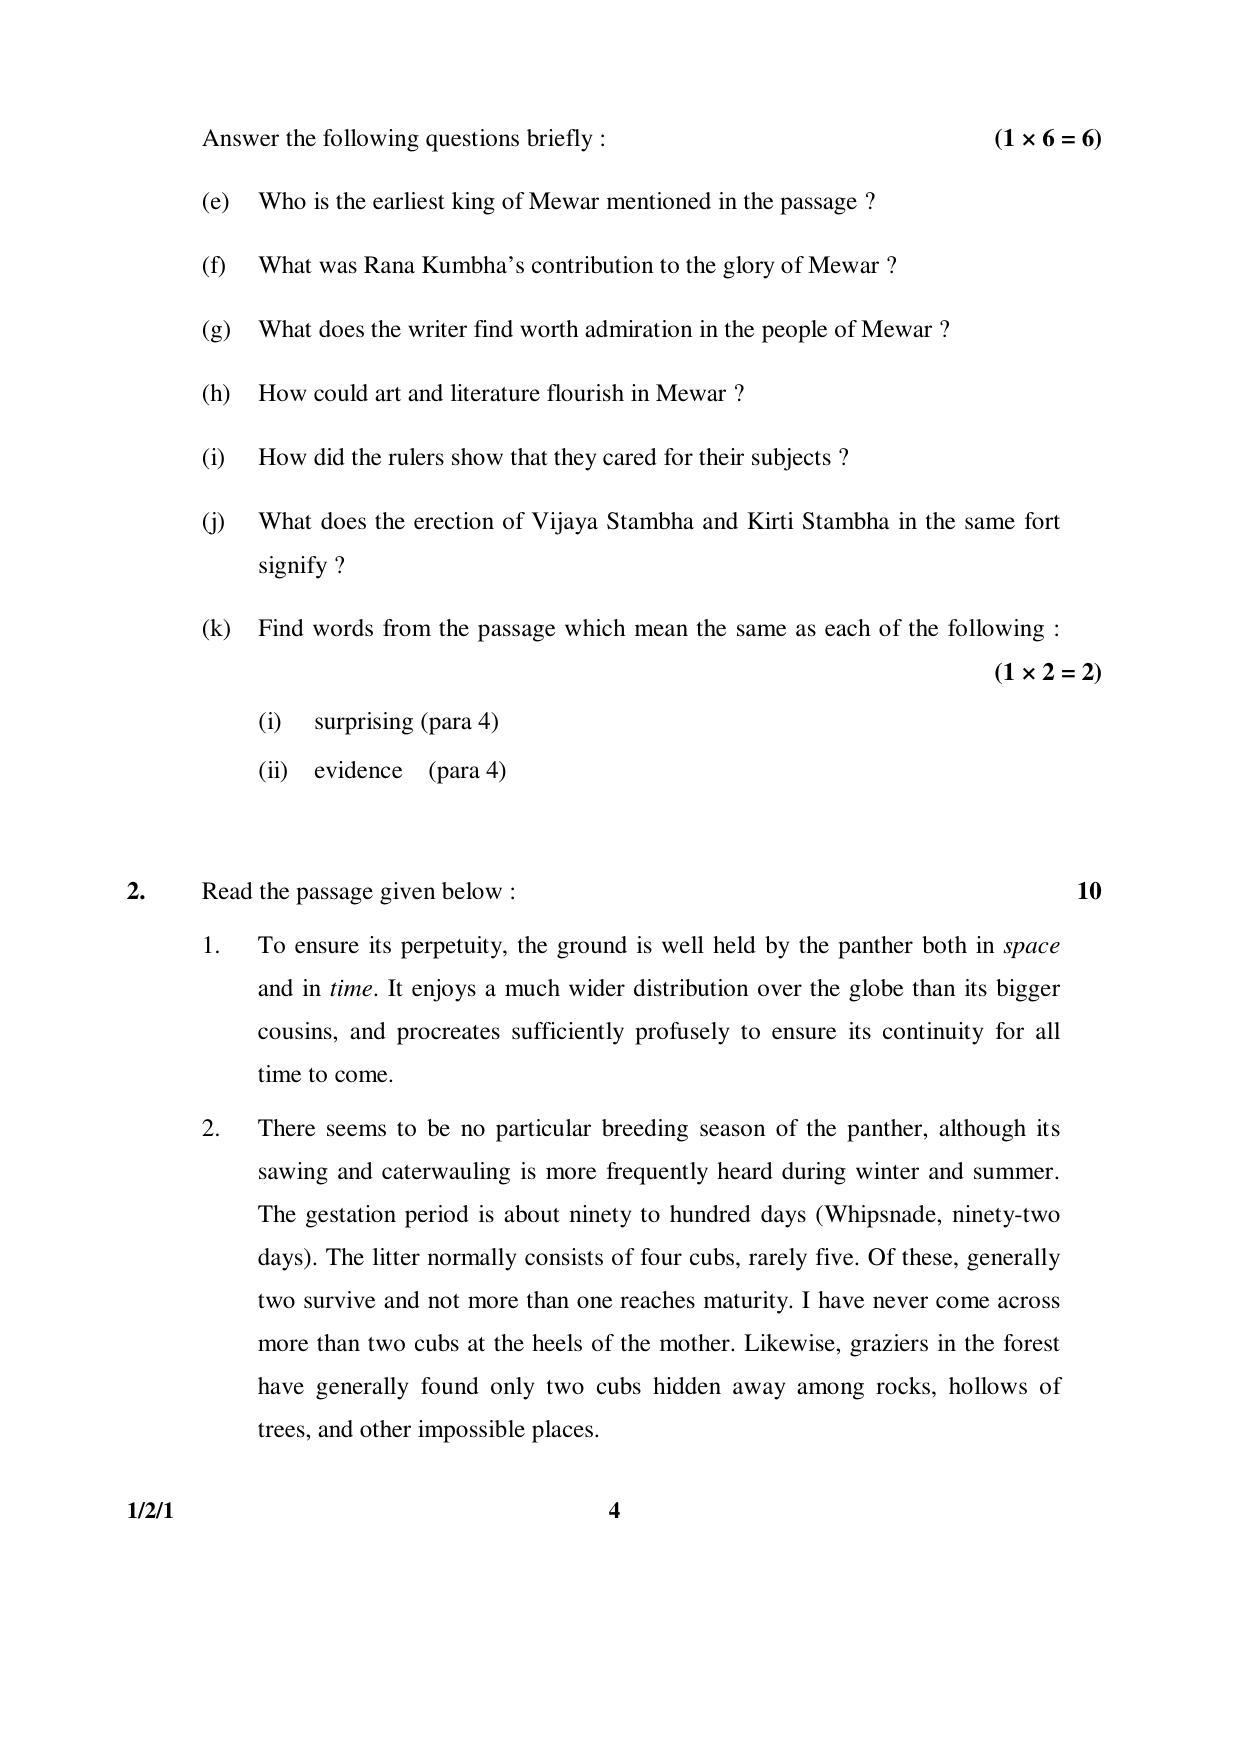 CBSE Class 12 1-2-1 ENGLISH CORE 2016 Question Paper - Page 4